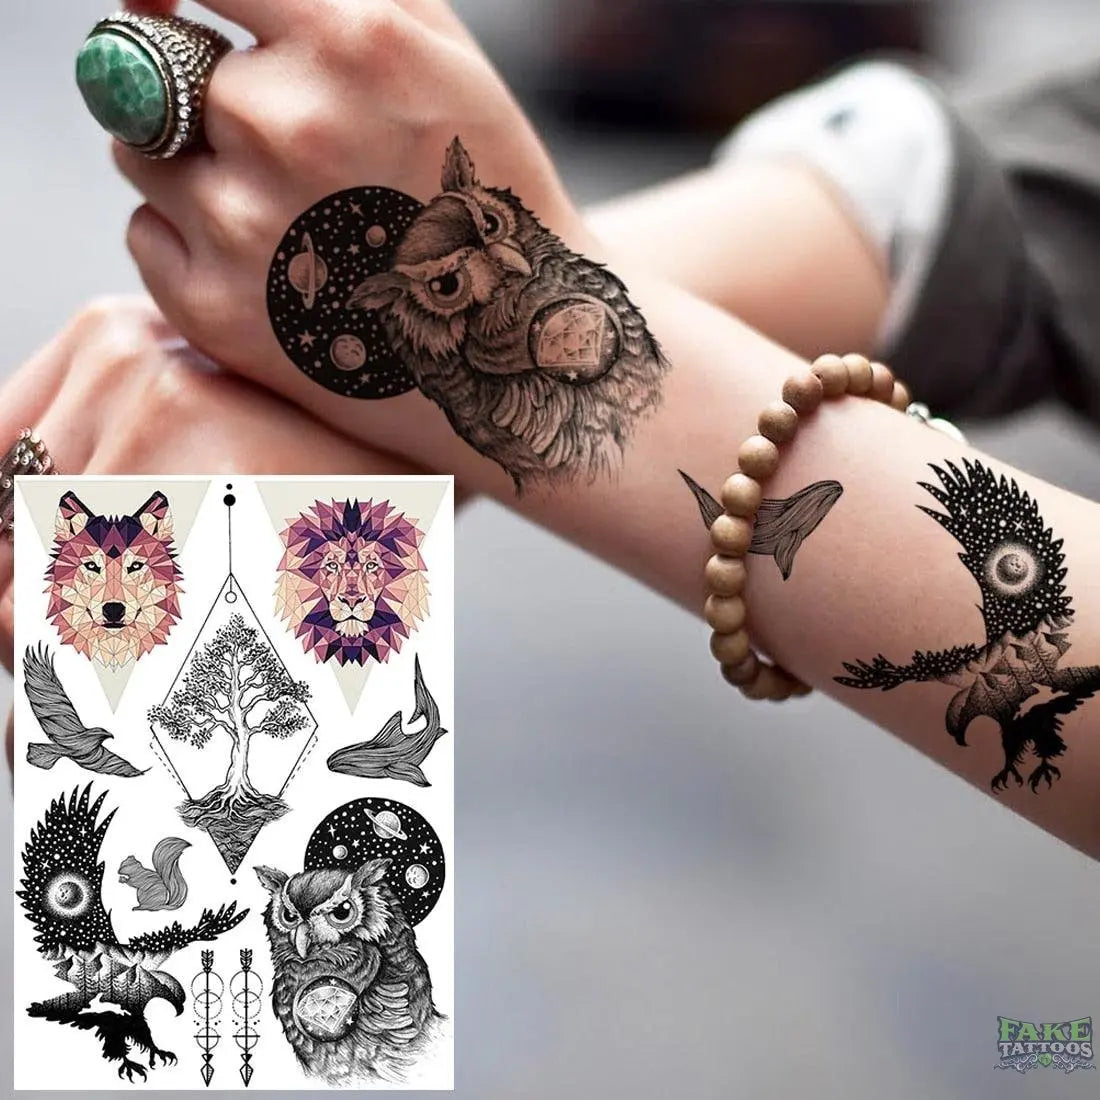 Cute animal tattoos | Small animal tattoo ideas #tattoo - YouTube